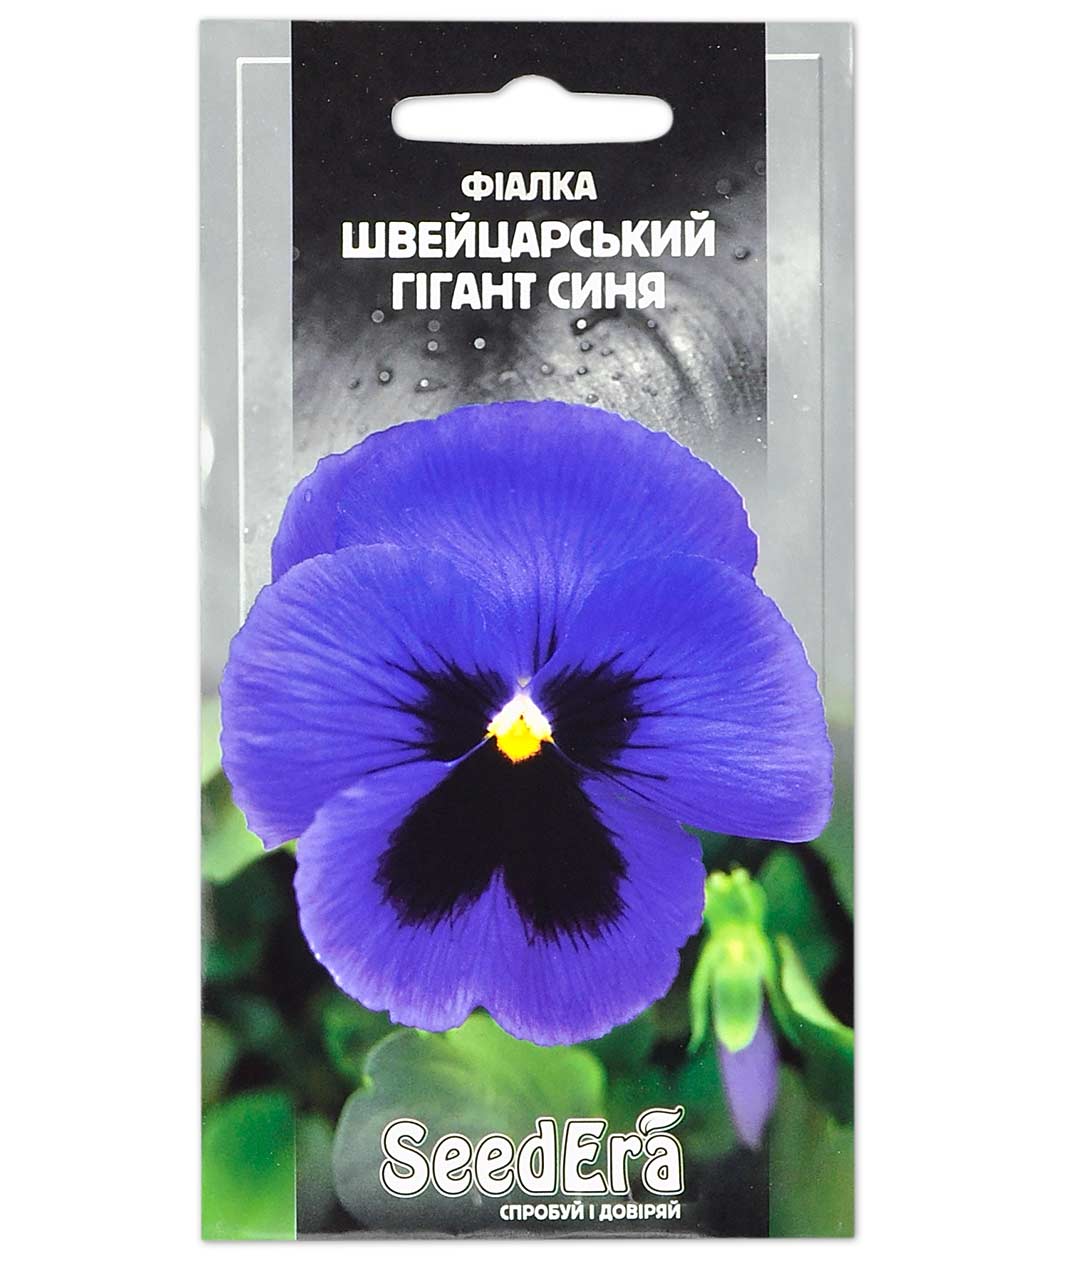 Изображение Семена цветов Виола Швейцарский гигант синяя